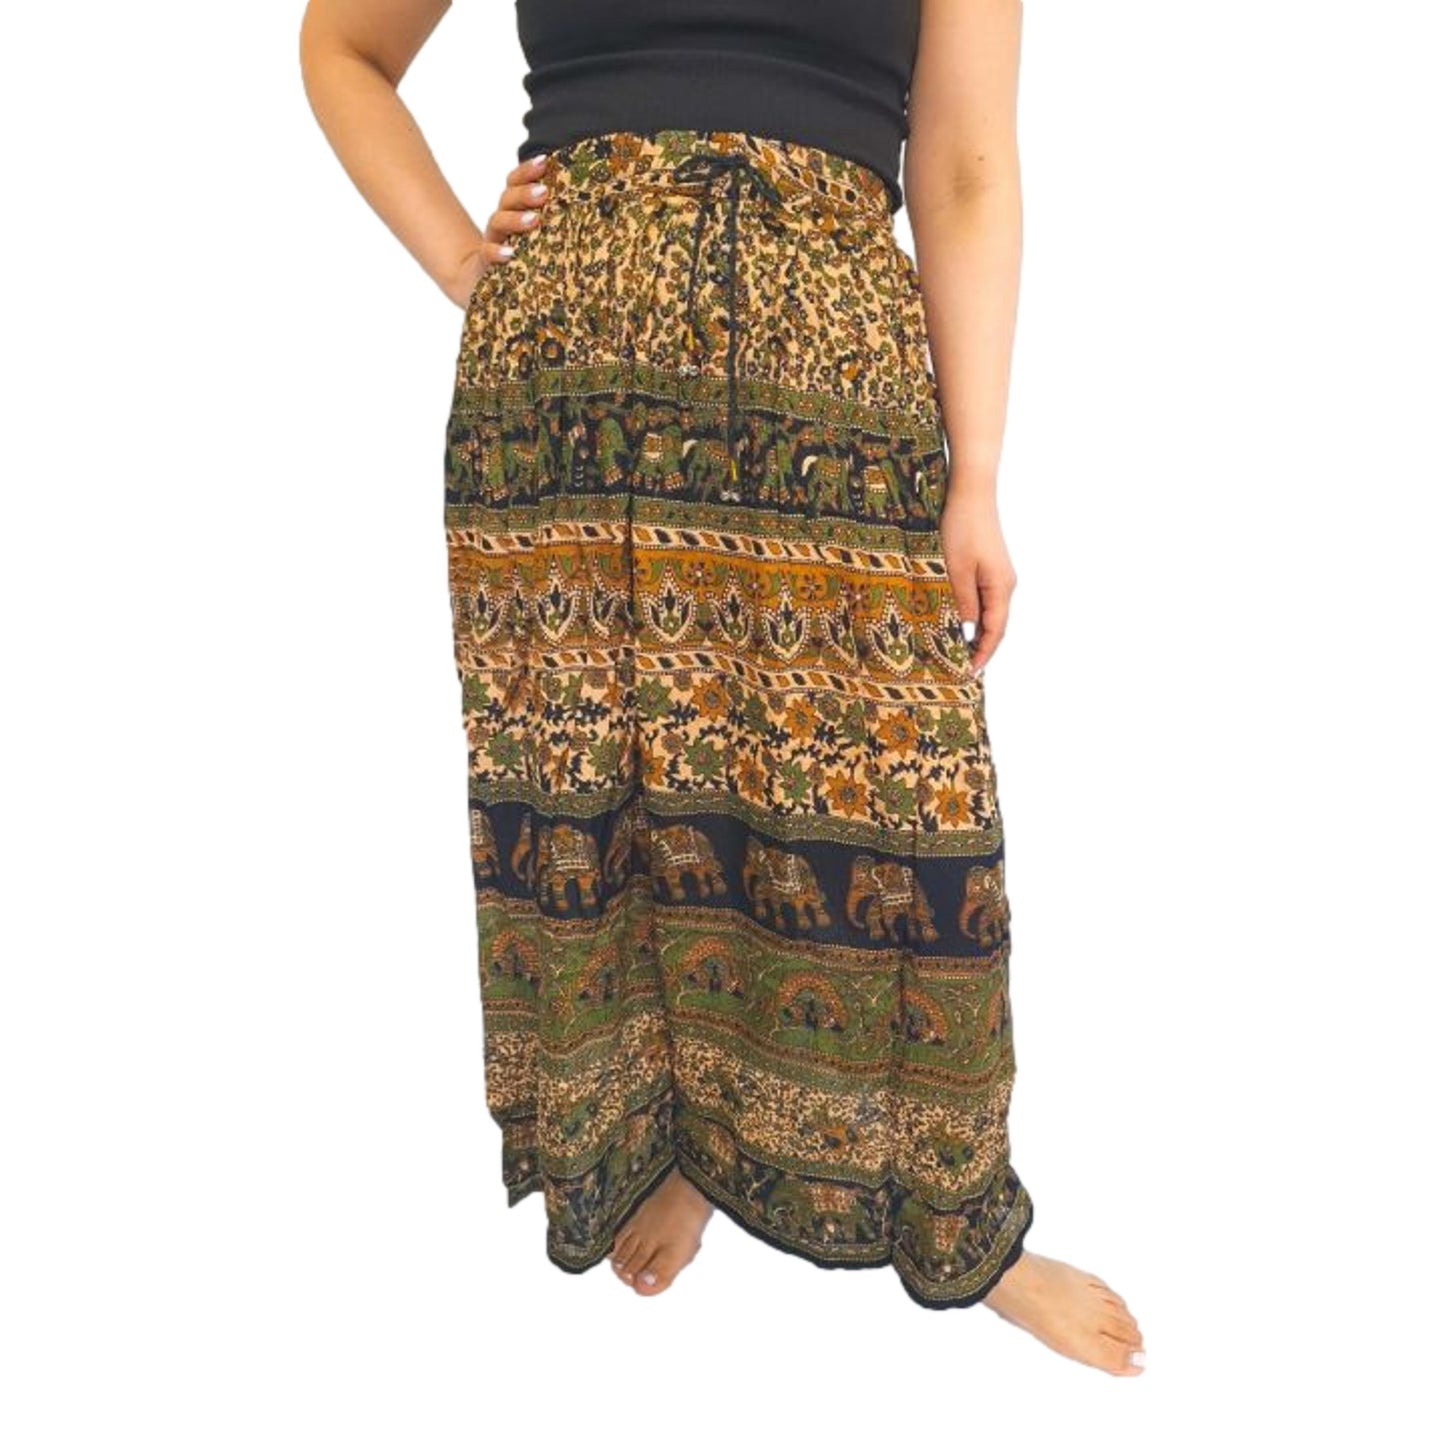 Bohemian Style Long Skirt